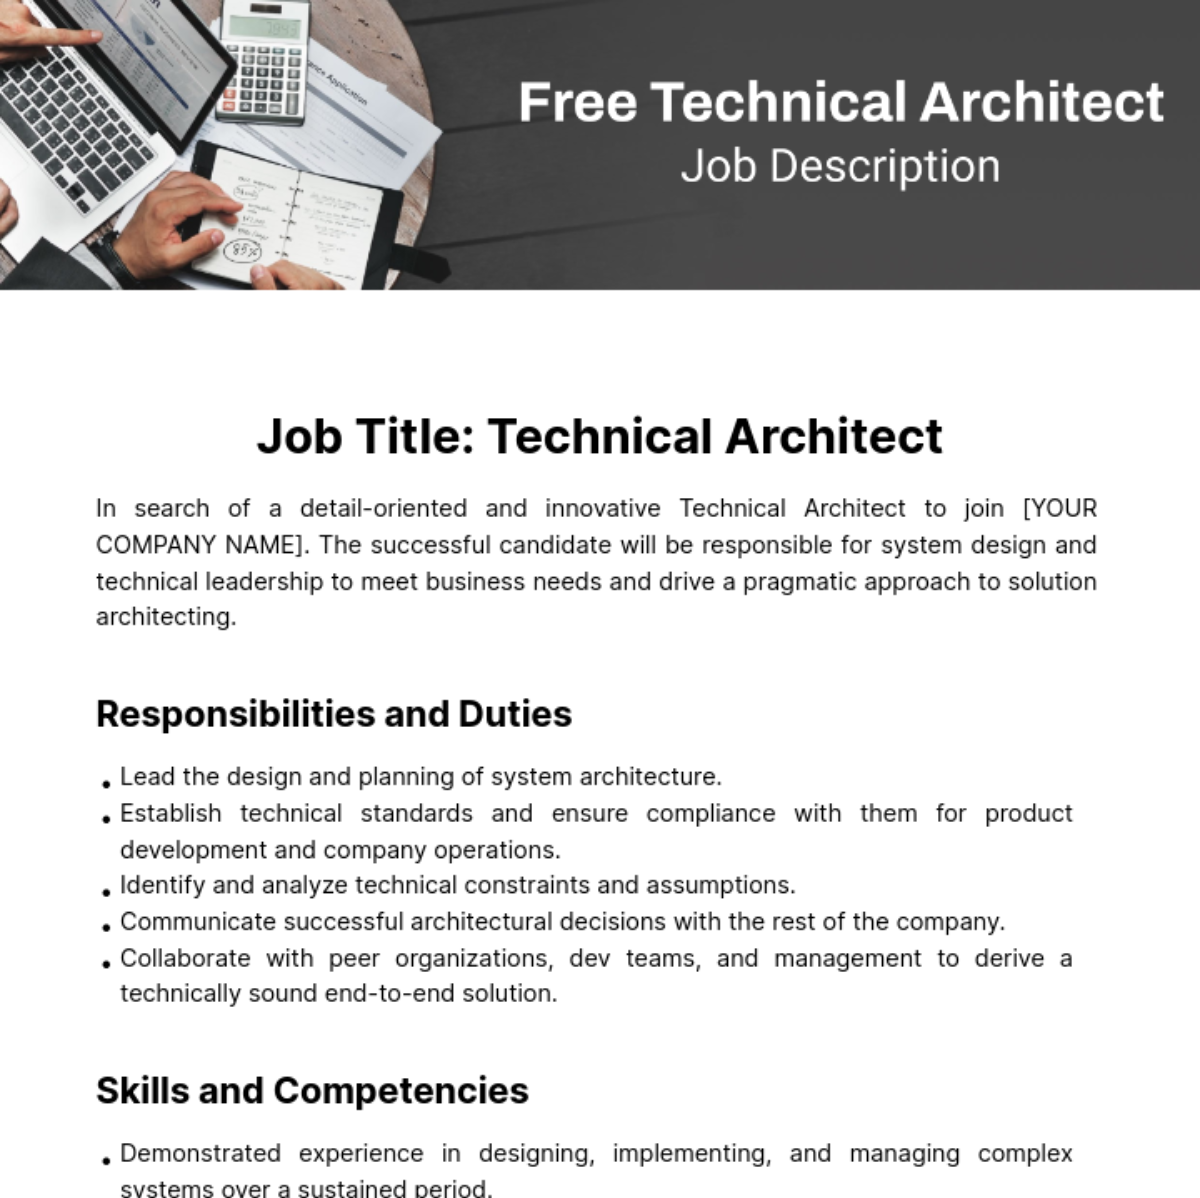 Free Technical Architect Job Description Template